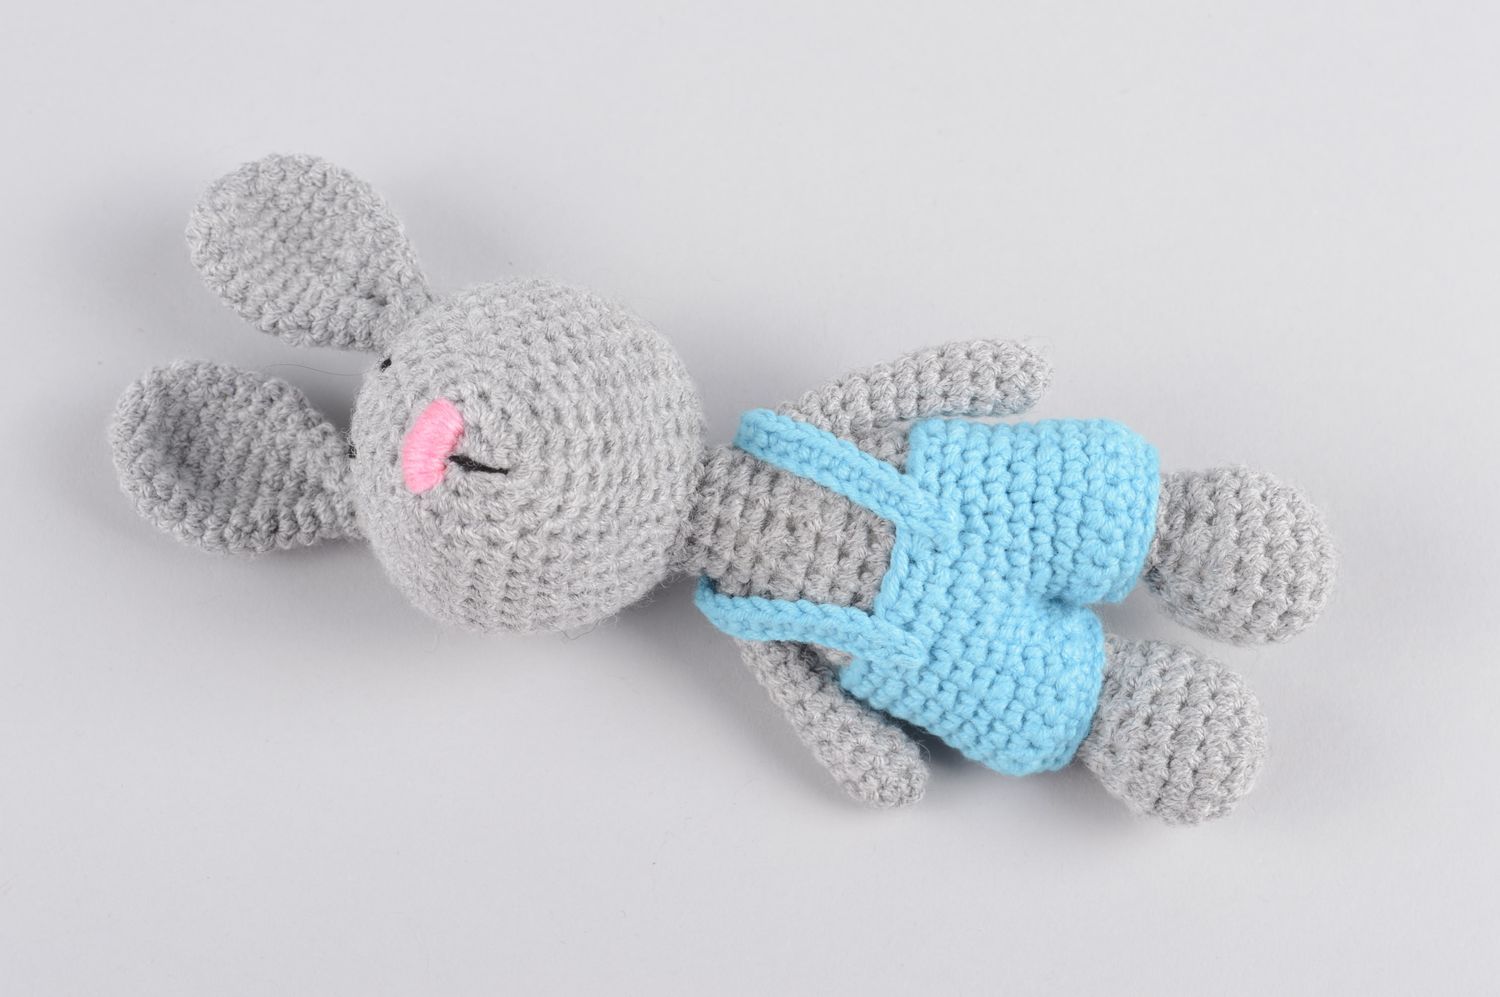 Beautiful handmade soft toy unusual crochet toy for kids birthday gift ideas photo 1